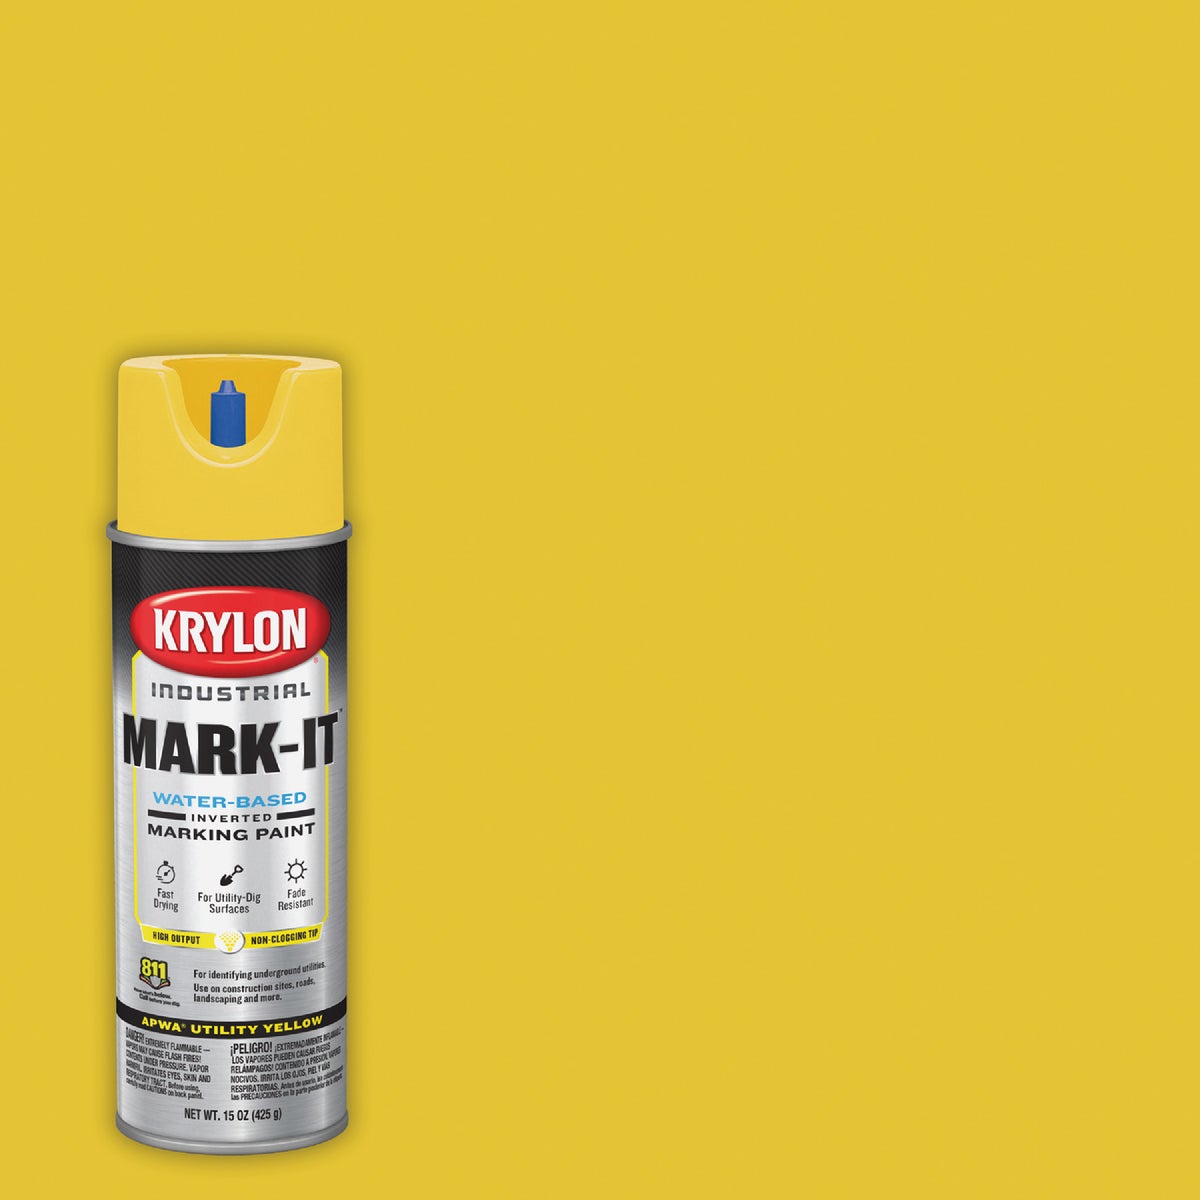 Krylon Mark-It 731708 Industrial WB APWA Utility Yellow Inverted Marking Paint